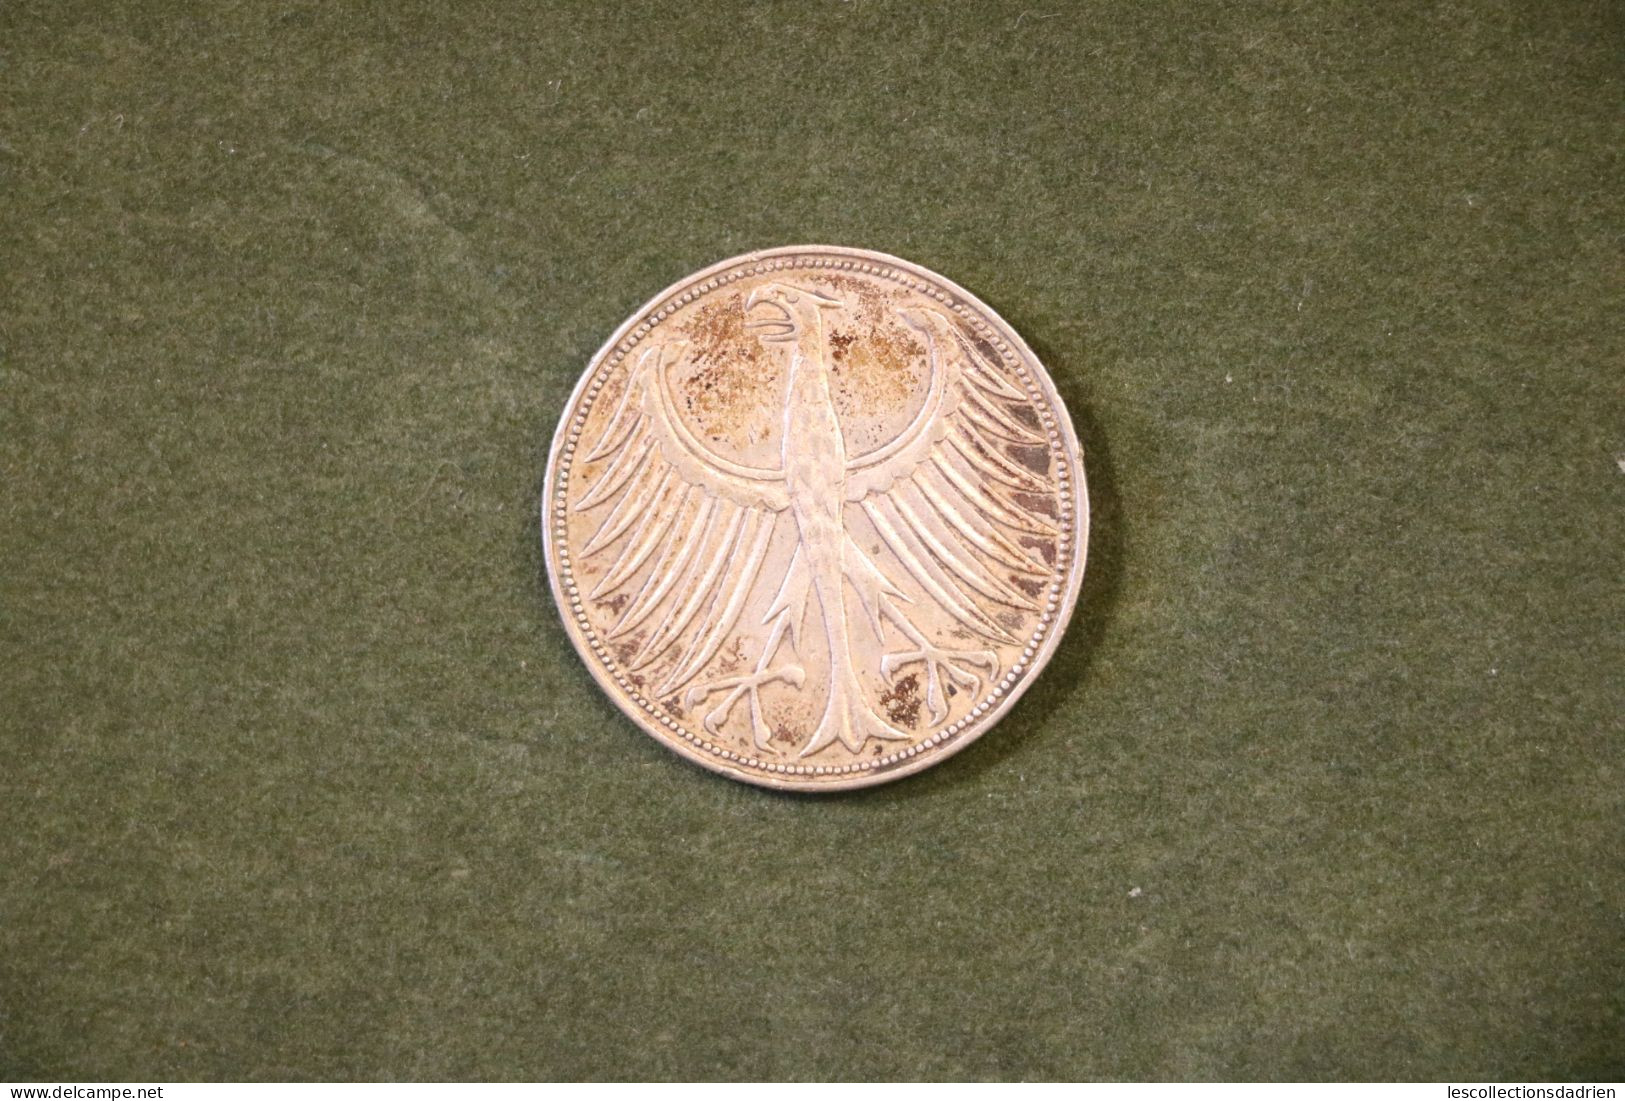 Pièce En Argent Allemagne 5 Deutsche Marck 1951 G -  German Silver Coin - 5 Marchi